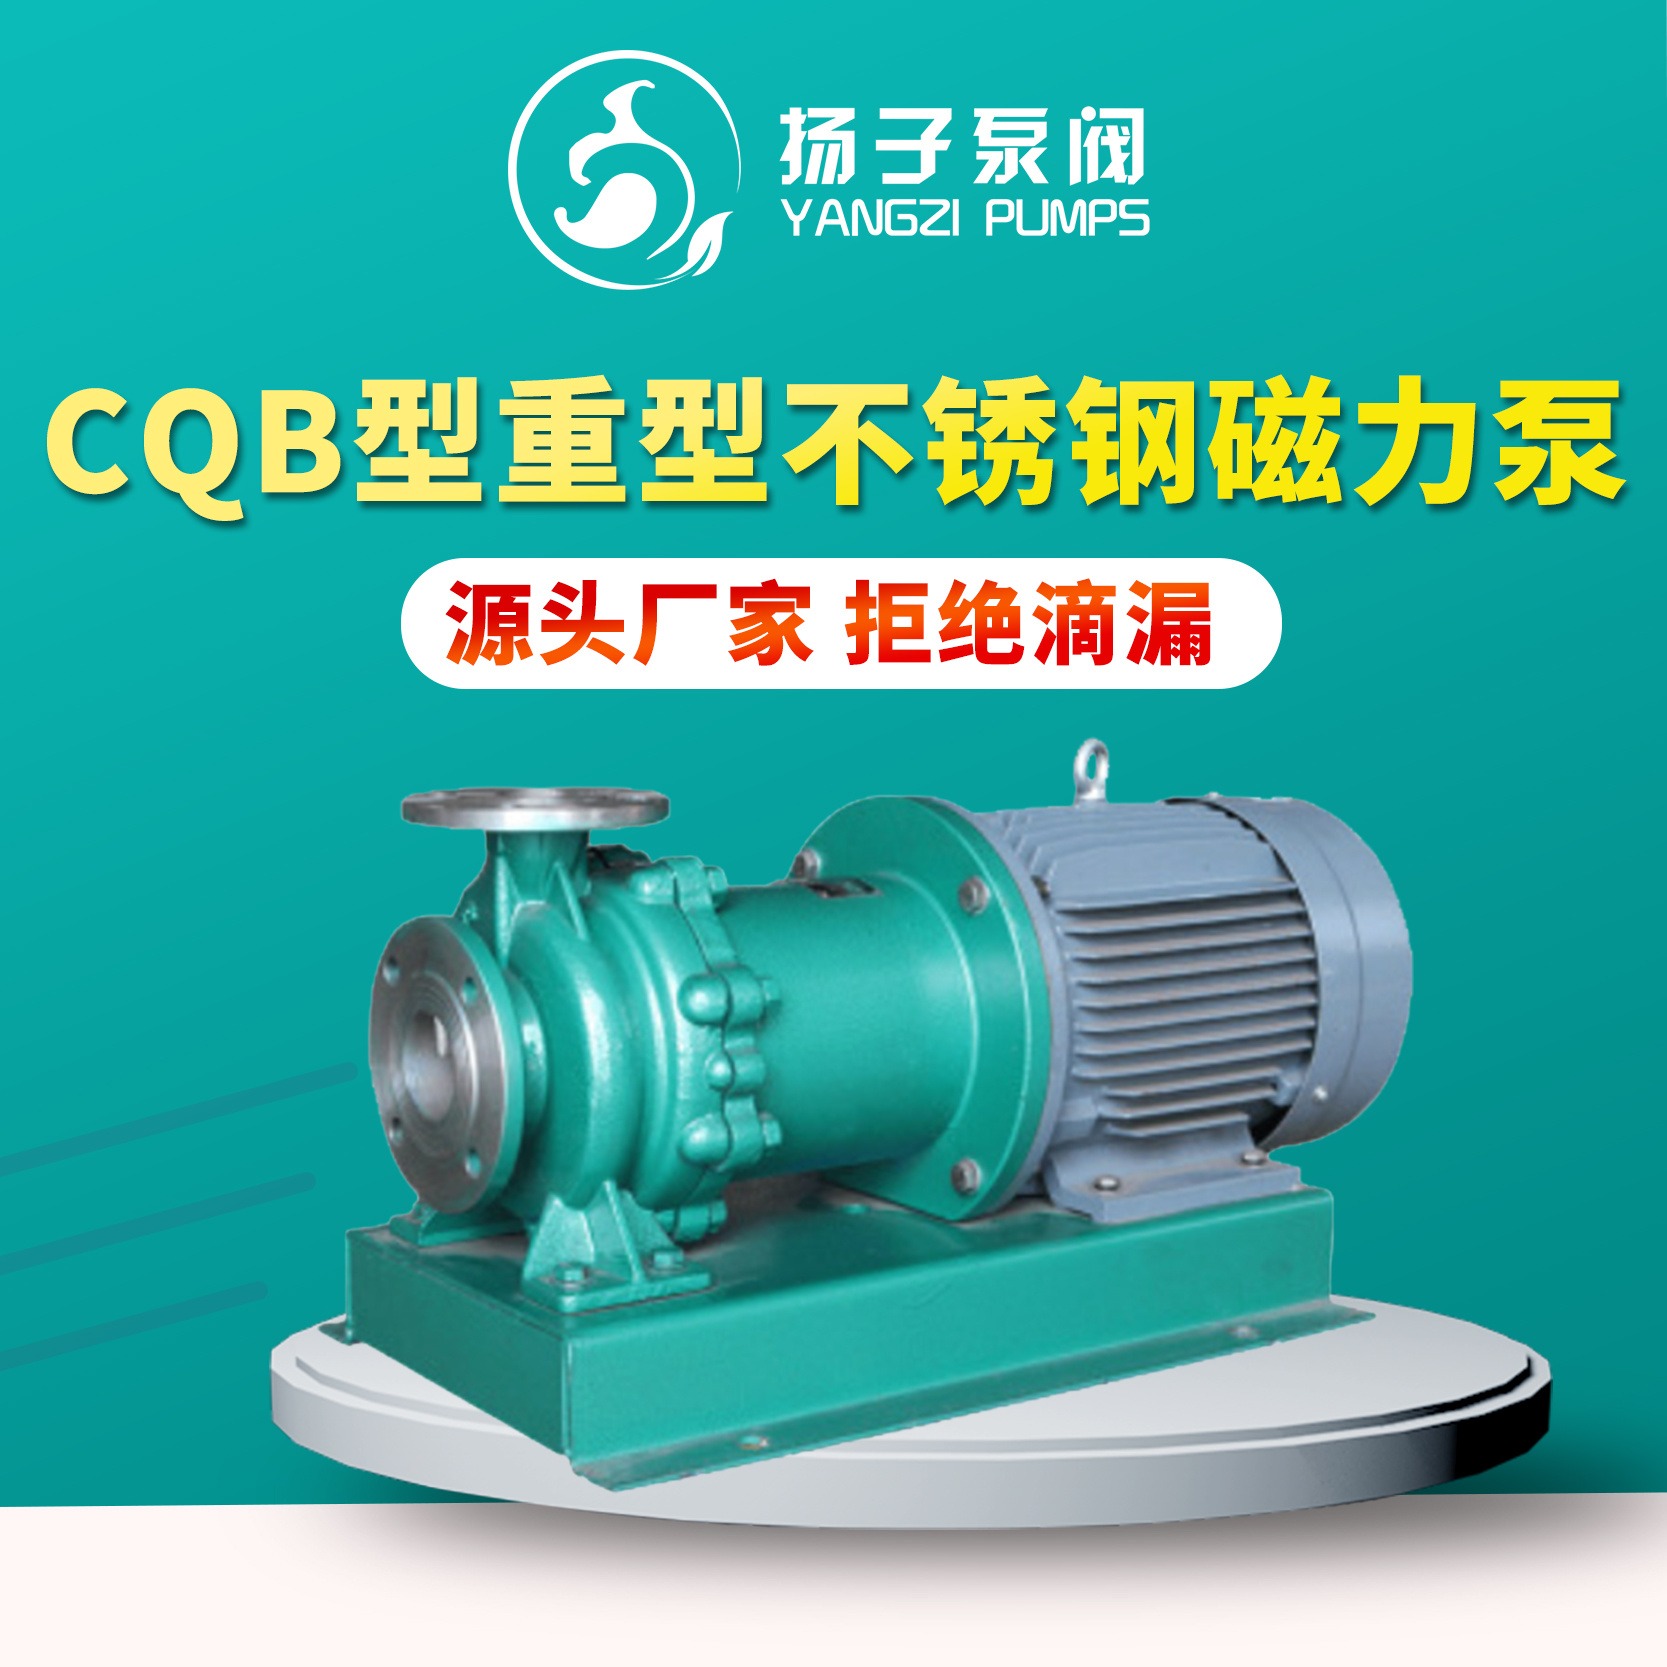 CQB-P型无泄漏磁力泵 重型防爆磁力泵 不锈钢磁力泵  大流量高密度贵重化学介质输送